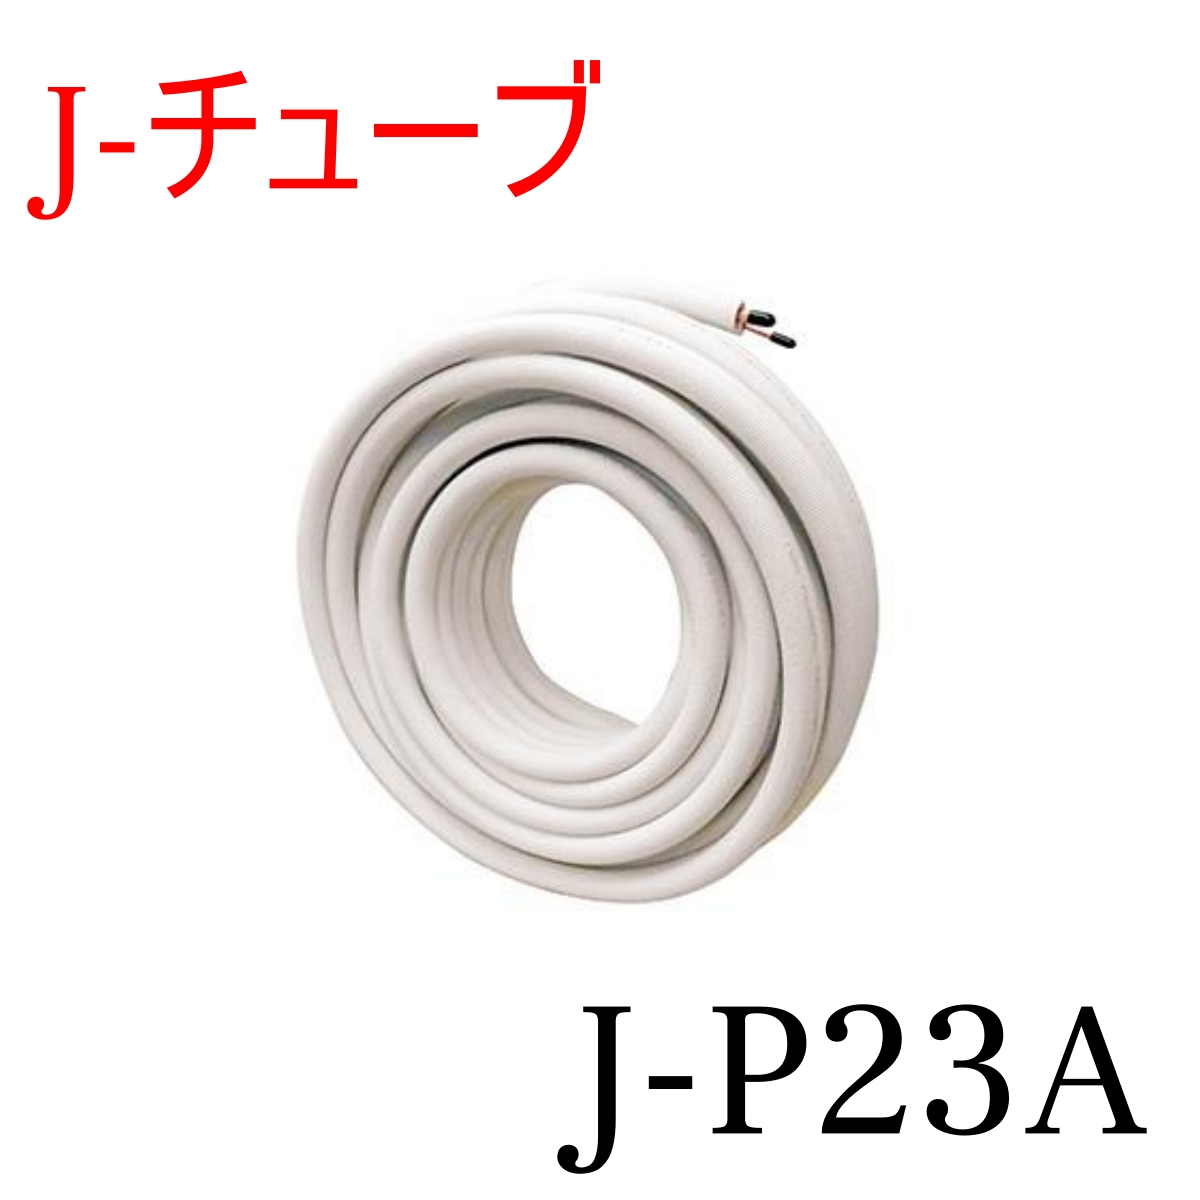 J-P23A Jチューブ 冷媒管 　2分3分ペアコイル 20m巻 エアコン用被覆銅管 新冷媒対応品 エアコン部材